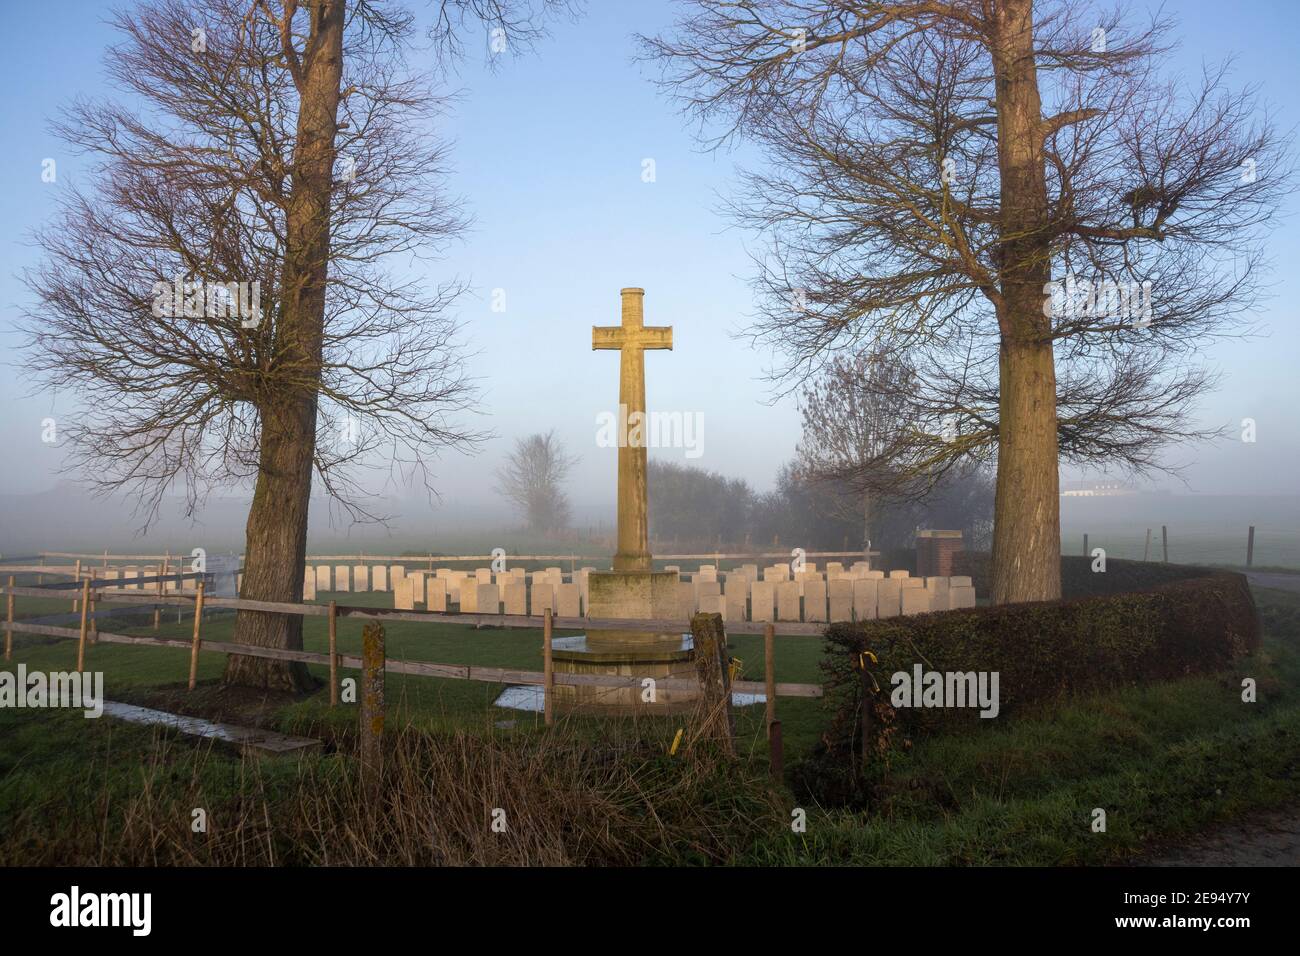 Cemeterie of world war I near Ploegsteert Wood, Ploegsteert, Henegouwen, Belgium, Europe. Photo V.D. Stock Photo